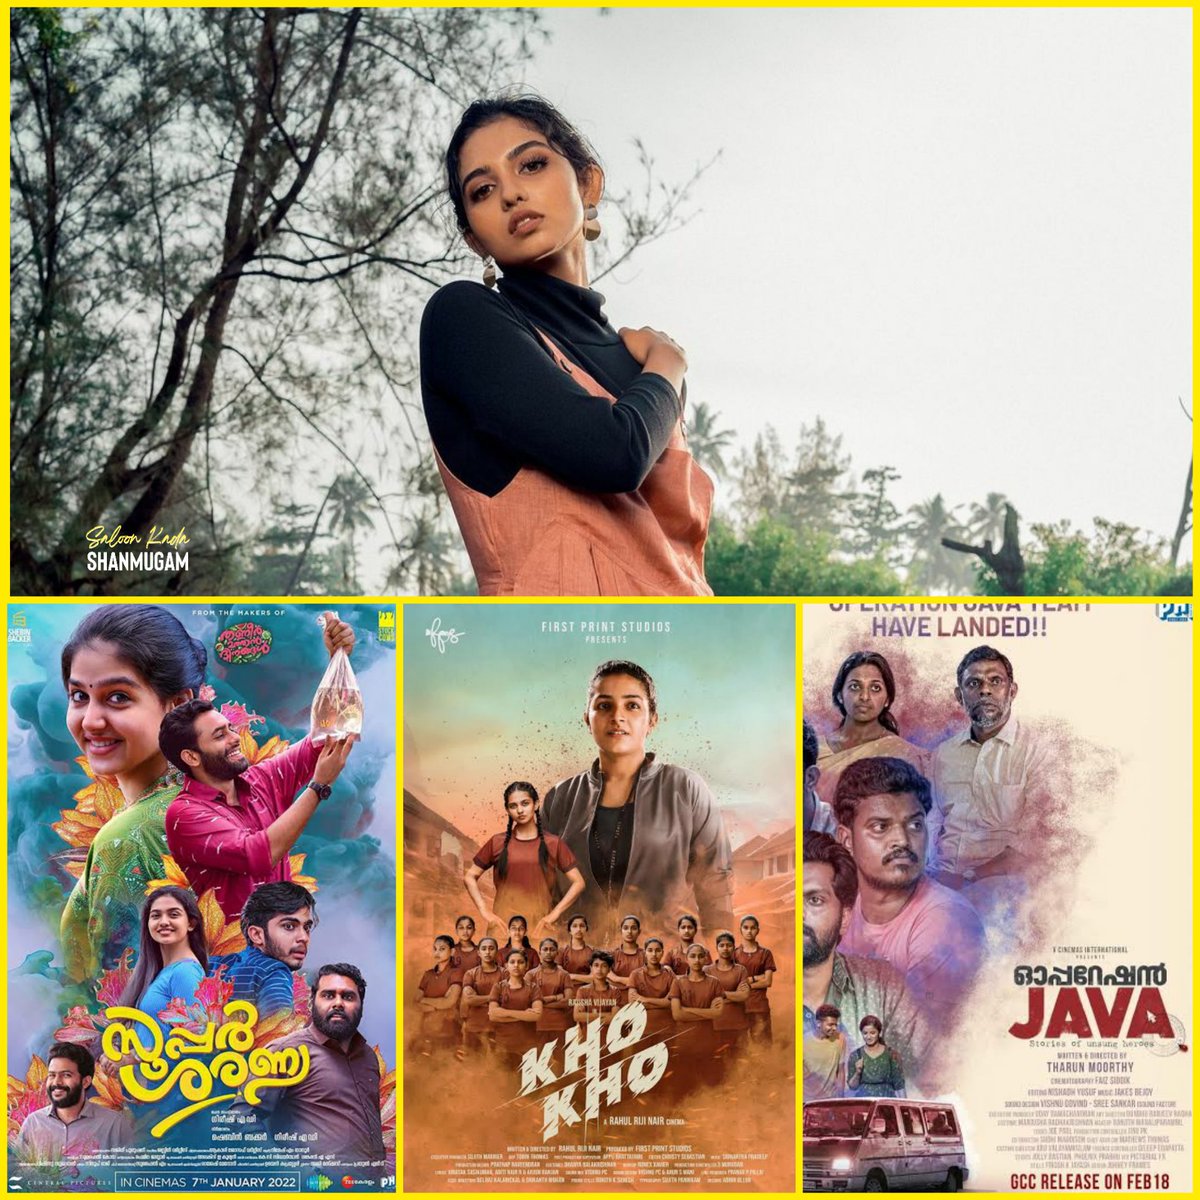 #Suriya41 Update🍿

Mamitha Baiju - MollyWood Actress Making Her Debut in #Suriya41 ❤️💥

She Recently acted in #SuperSharanya - #Operationjava - #KhoKho 👍🏼

Her Acting Will be very Good💯
#MamithaBaiju - #KrithiShetty
Bala Mama ennana seiya poraroo🏃...